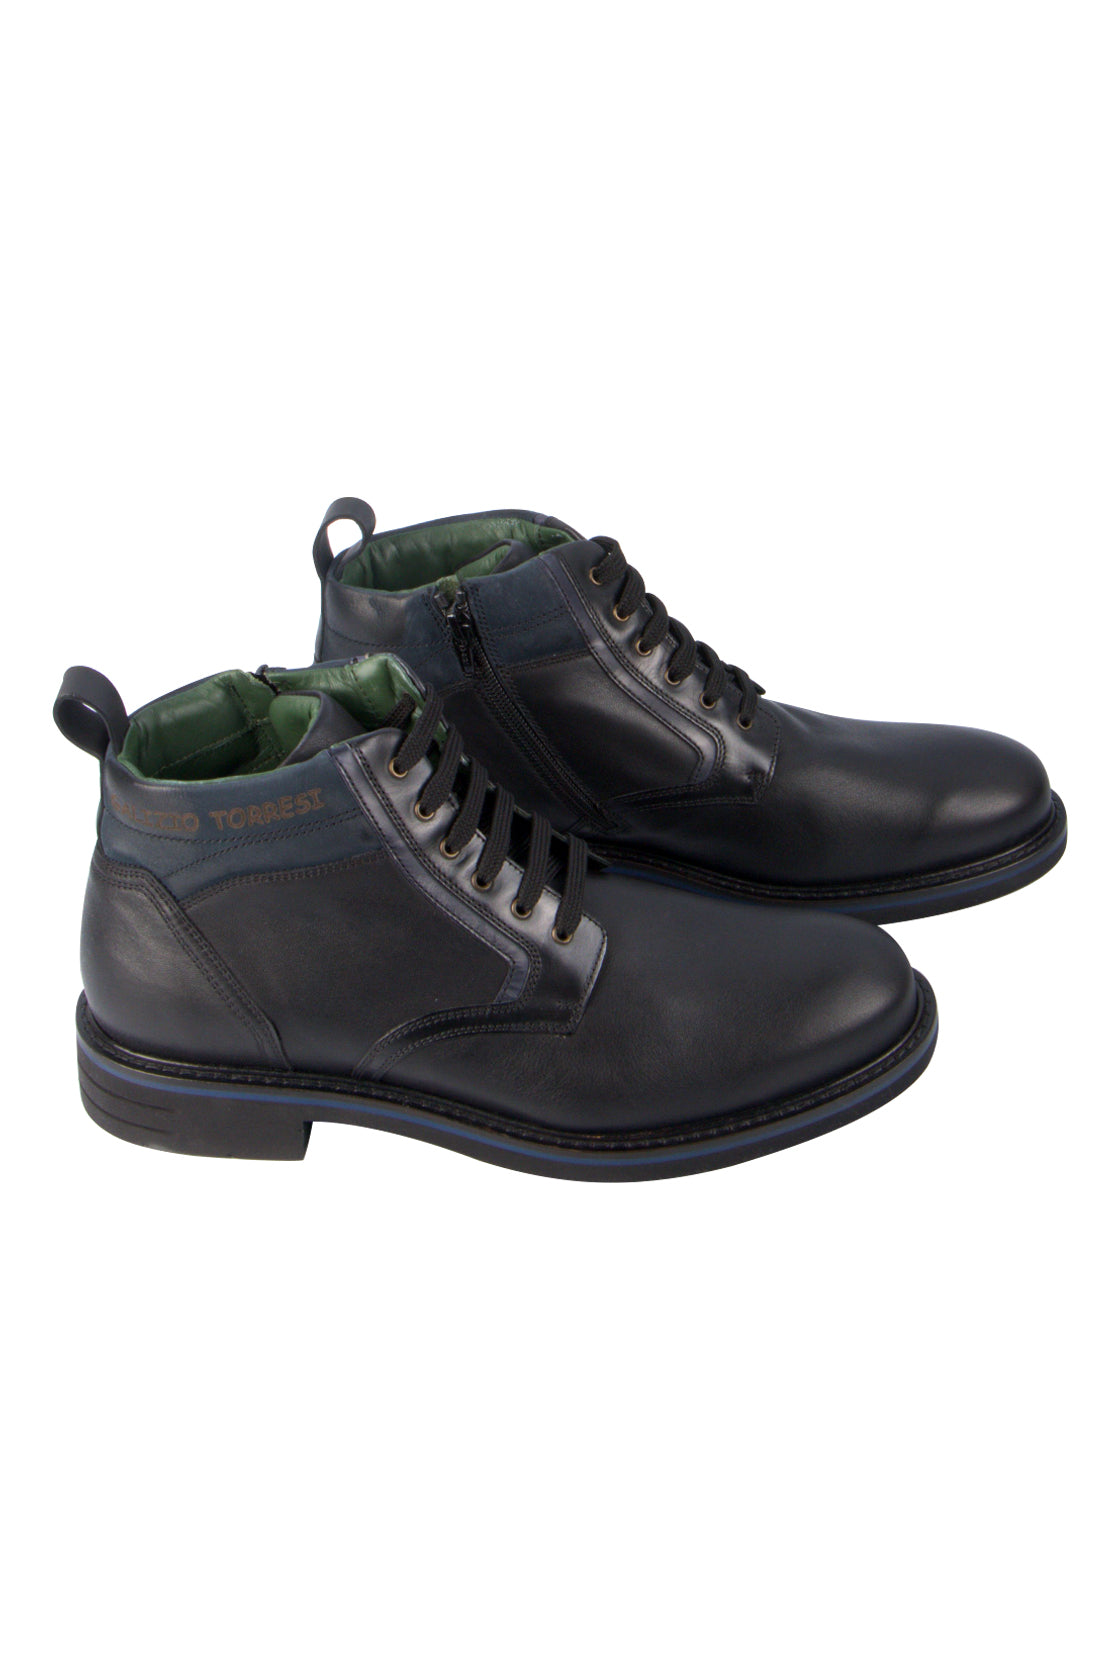 Galizio Torresi Lace Boots Nero/Navy